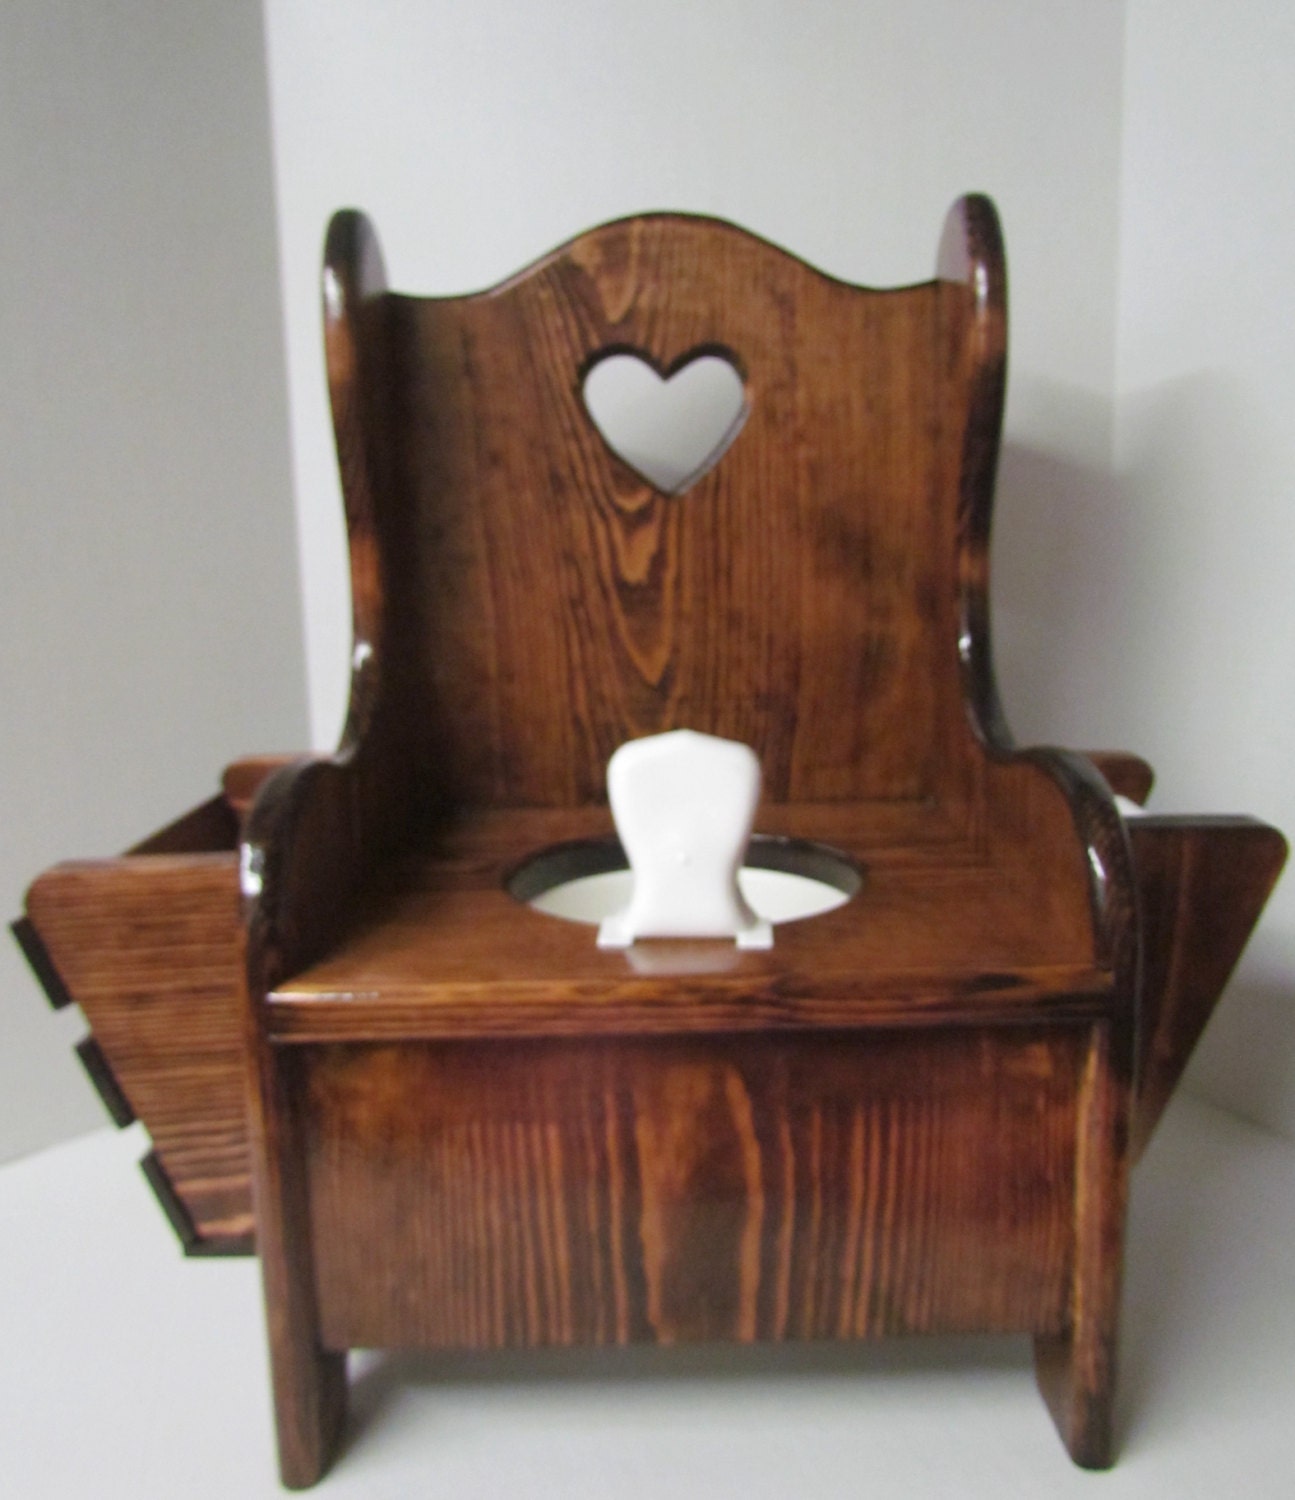 Potty Chair/Wooden Potty Chair/Potty Chair with Heart Cut